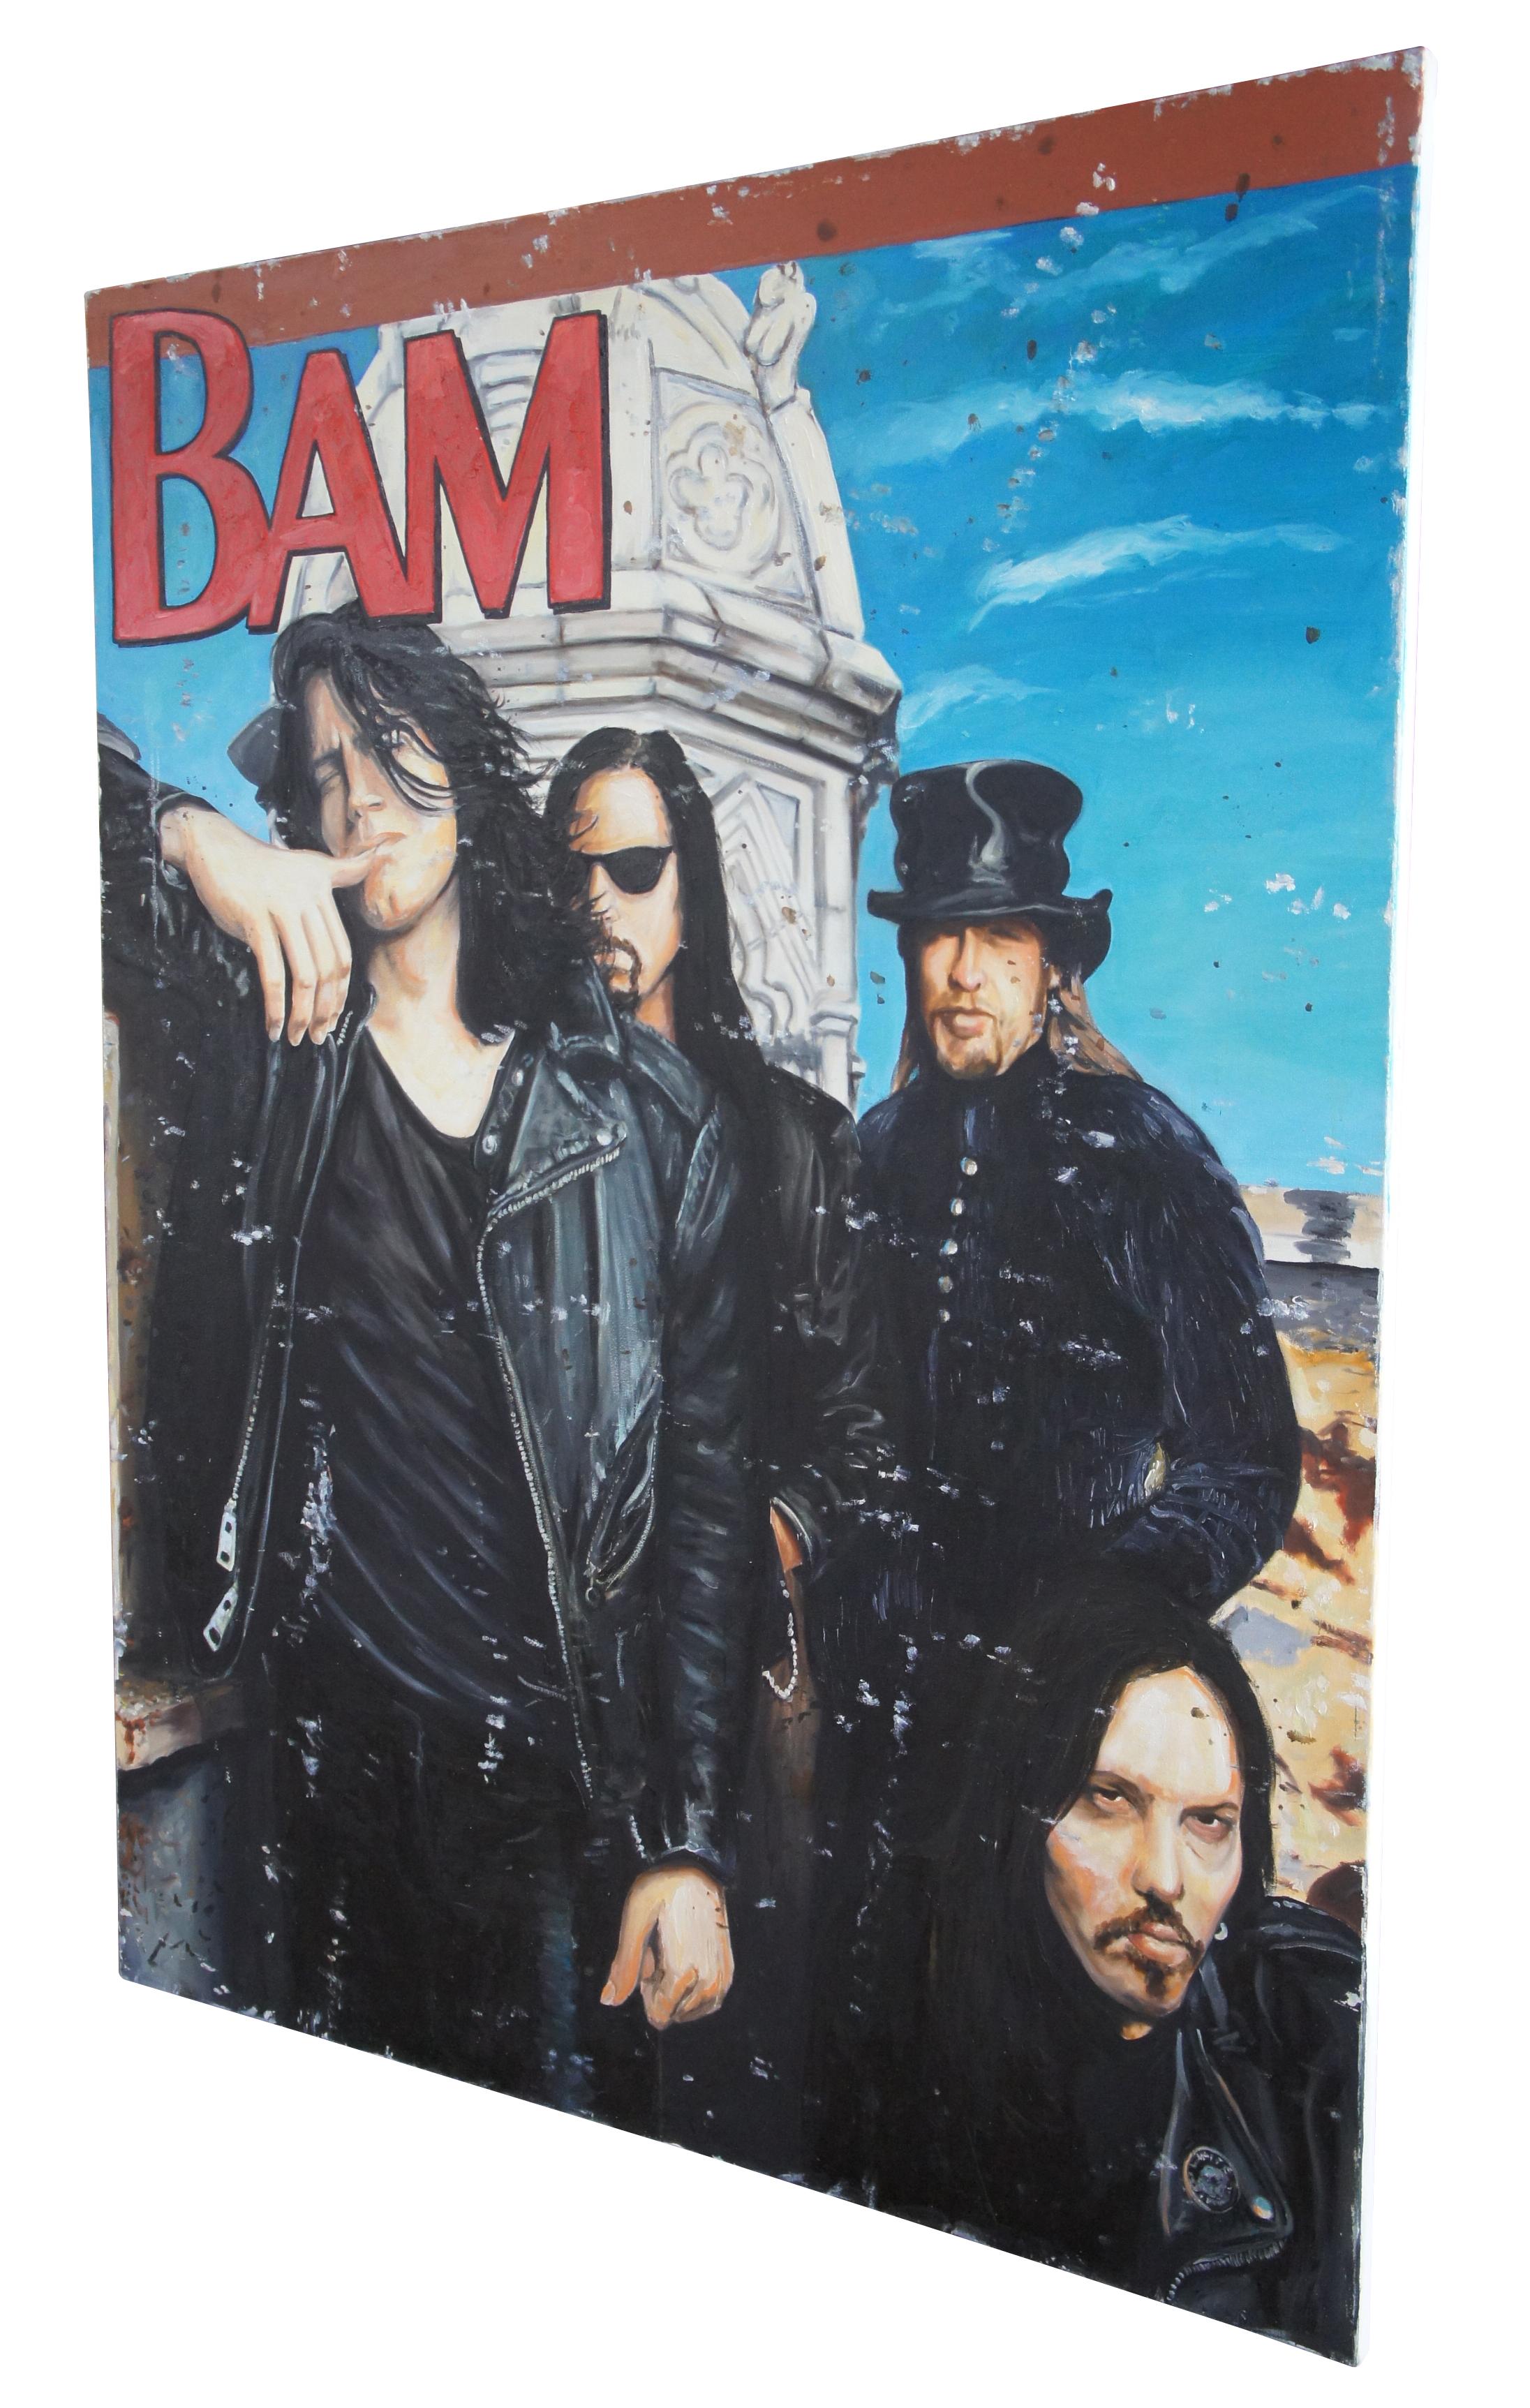 Bam oil painting by Kathleen Sullivan realism portrait rock band artwork, measures: 83